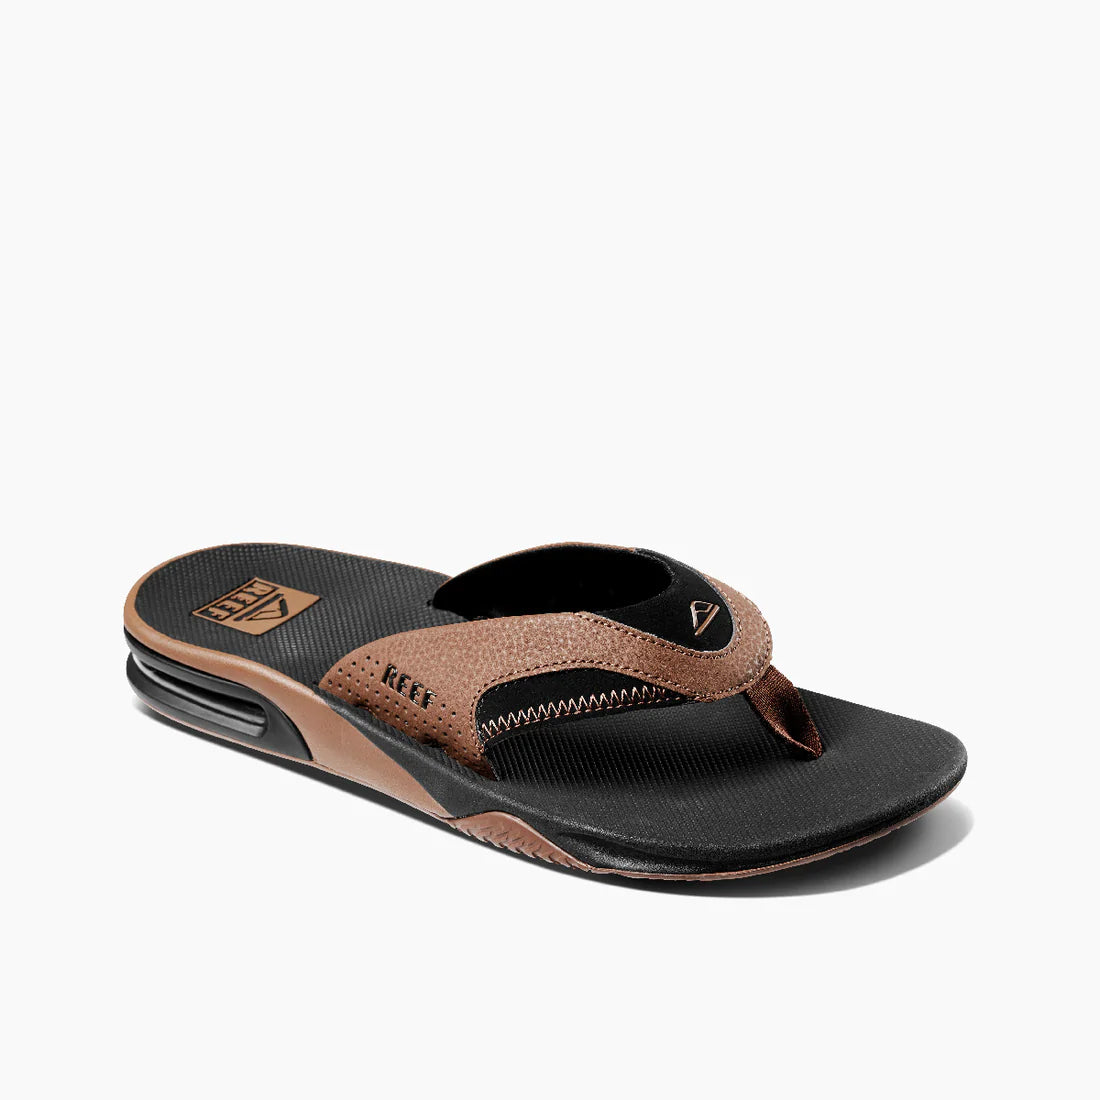 Reef Mens Fanning Black/Tan Sandals